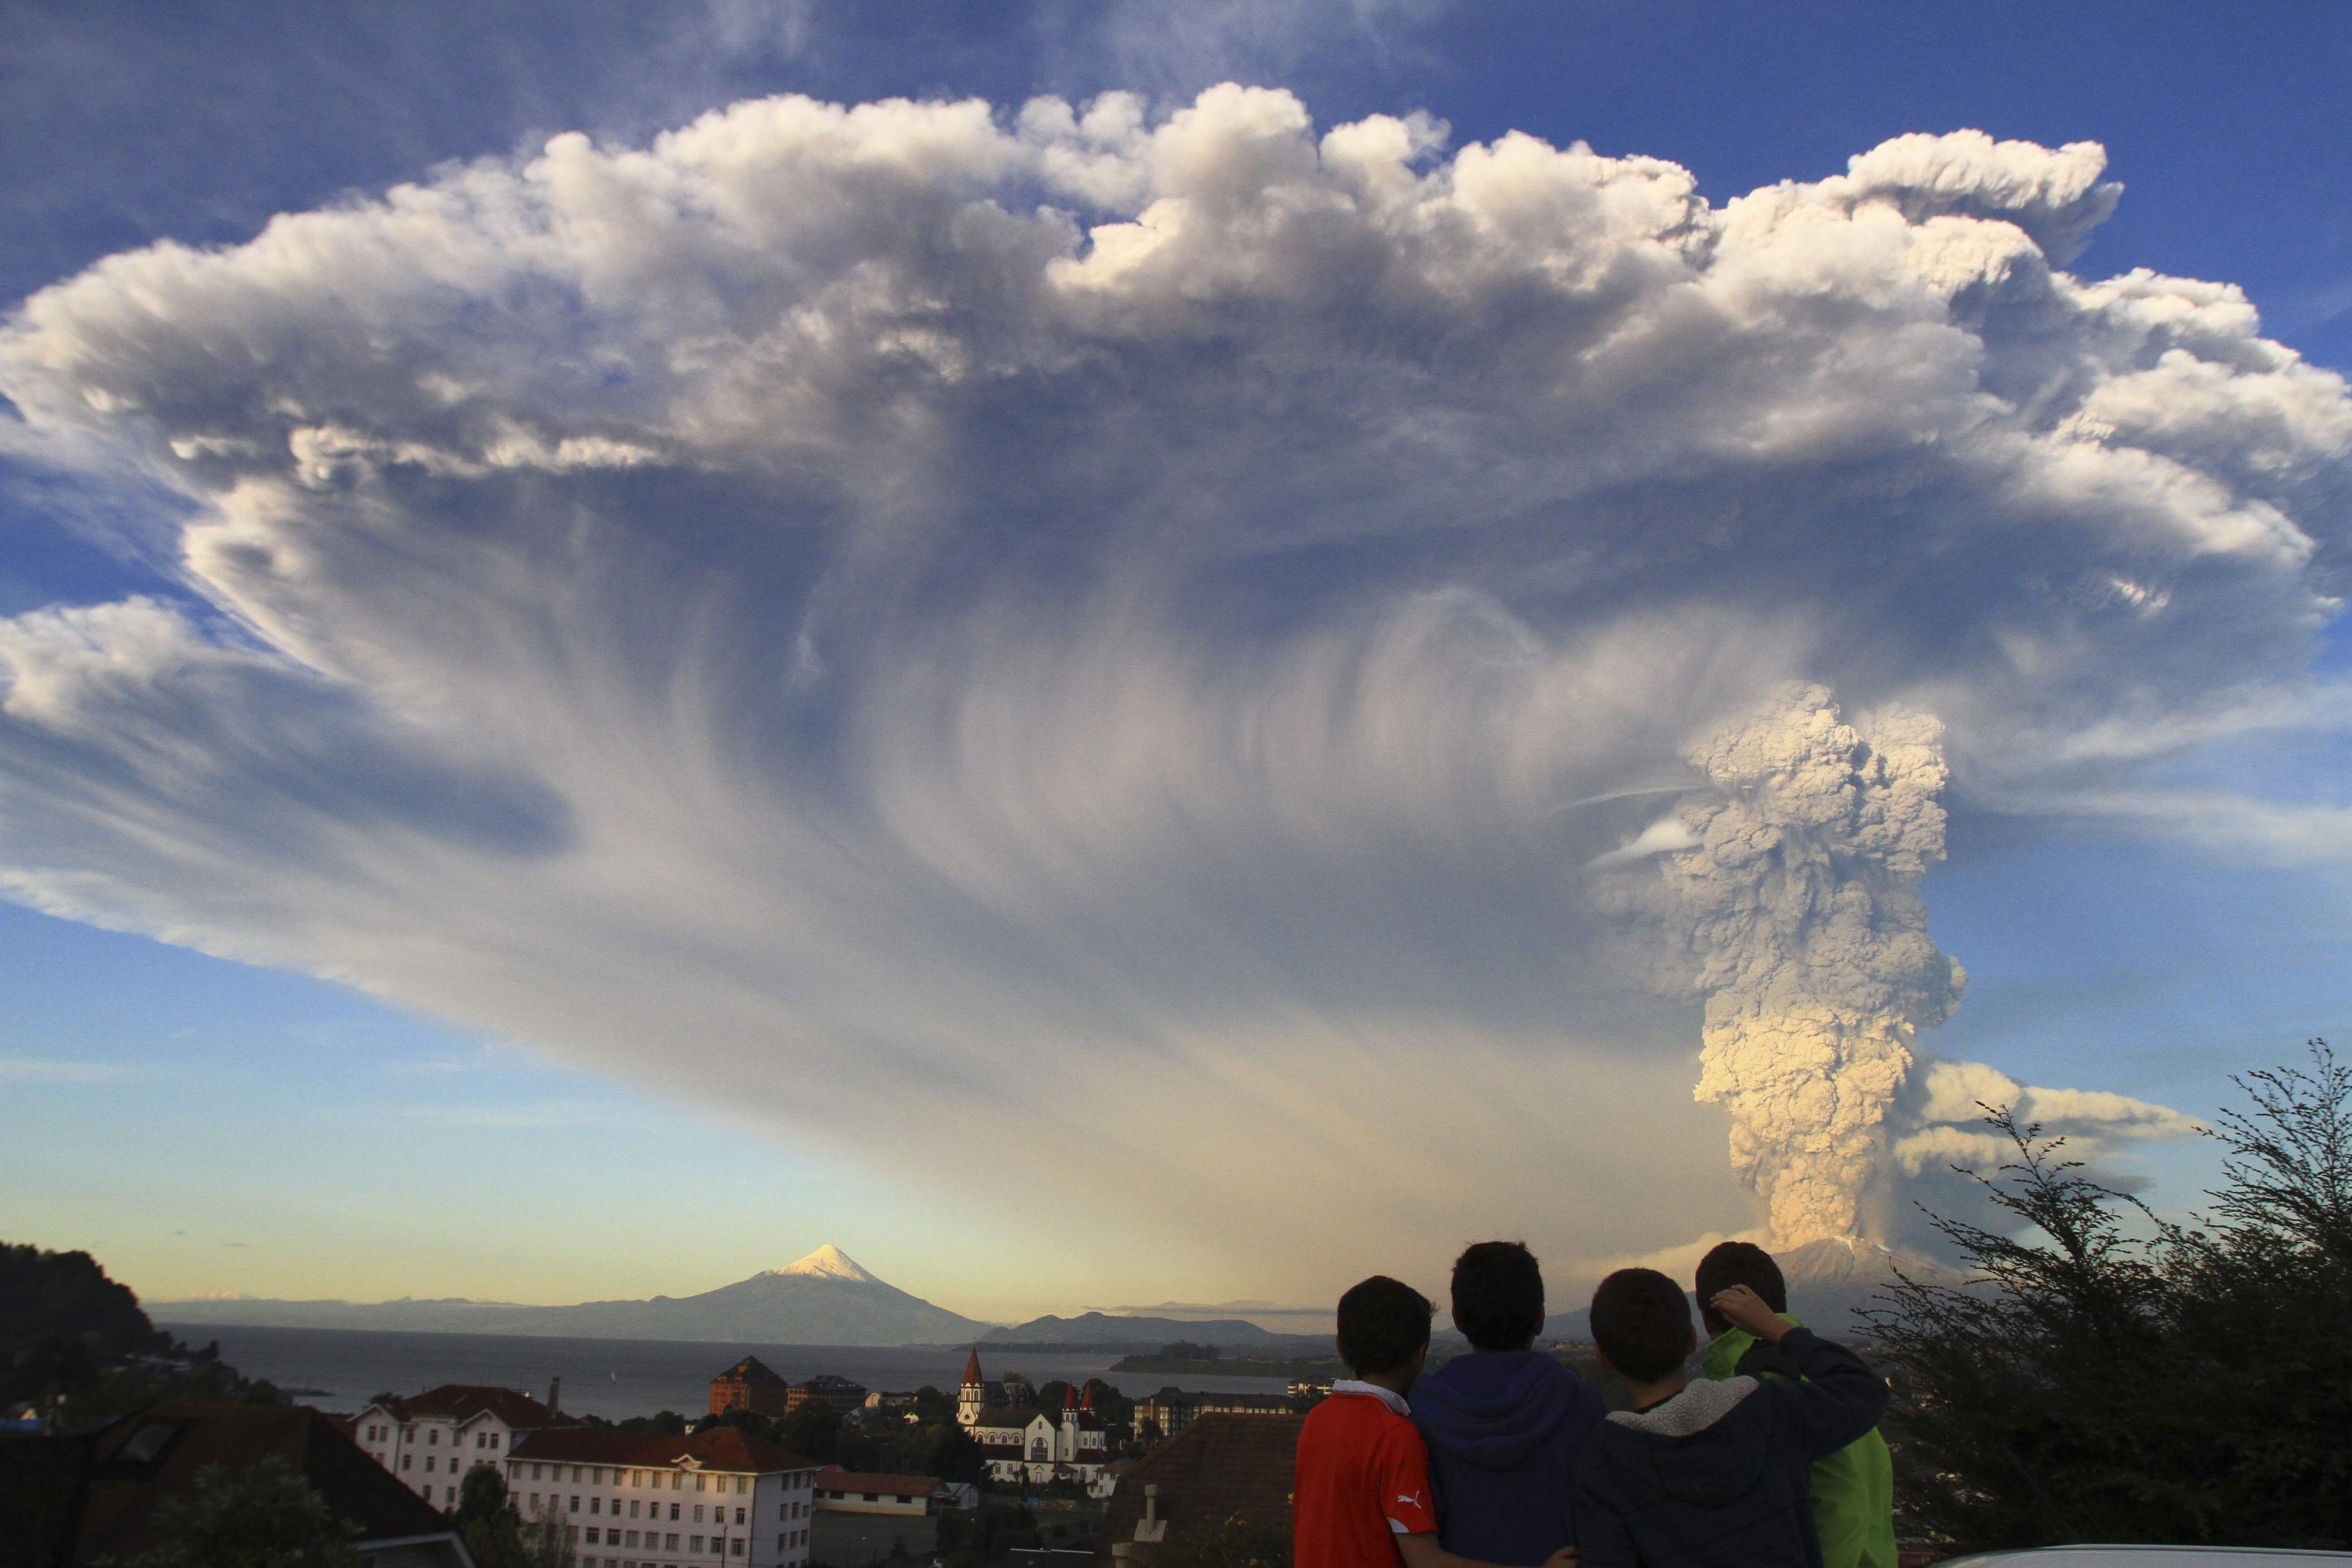 Volcano still active, but Chile no longer fears major blast | tbo.com